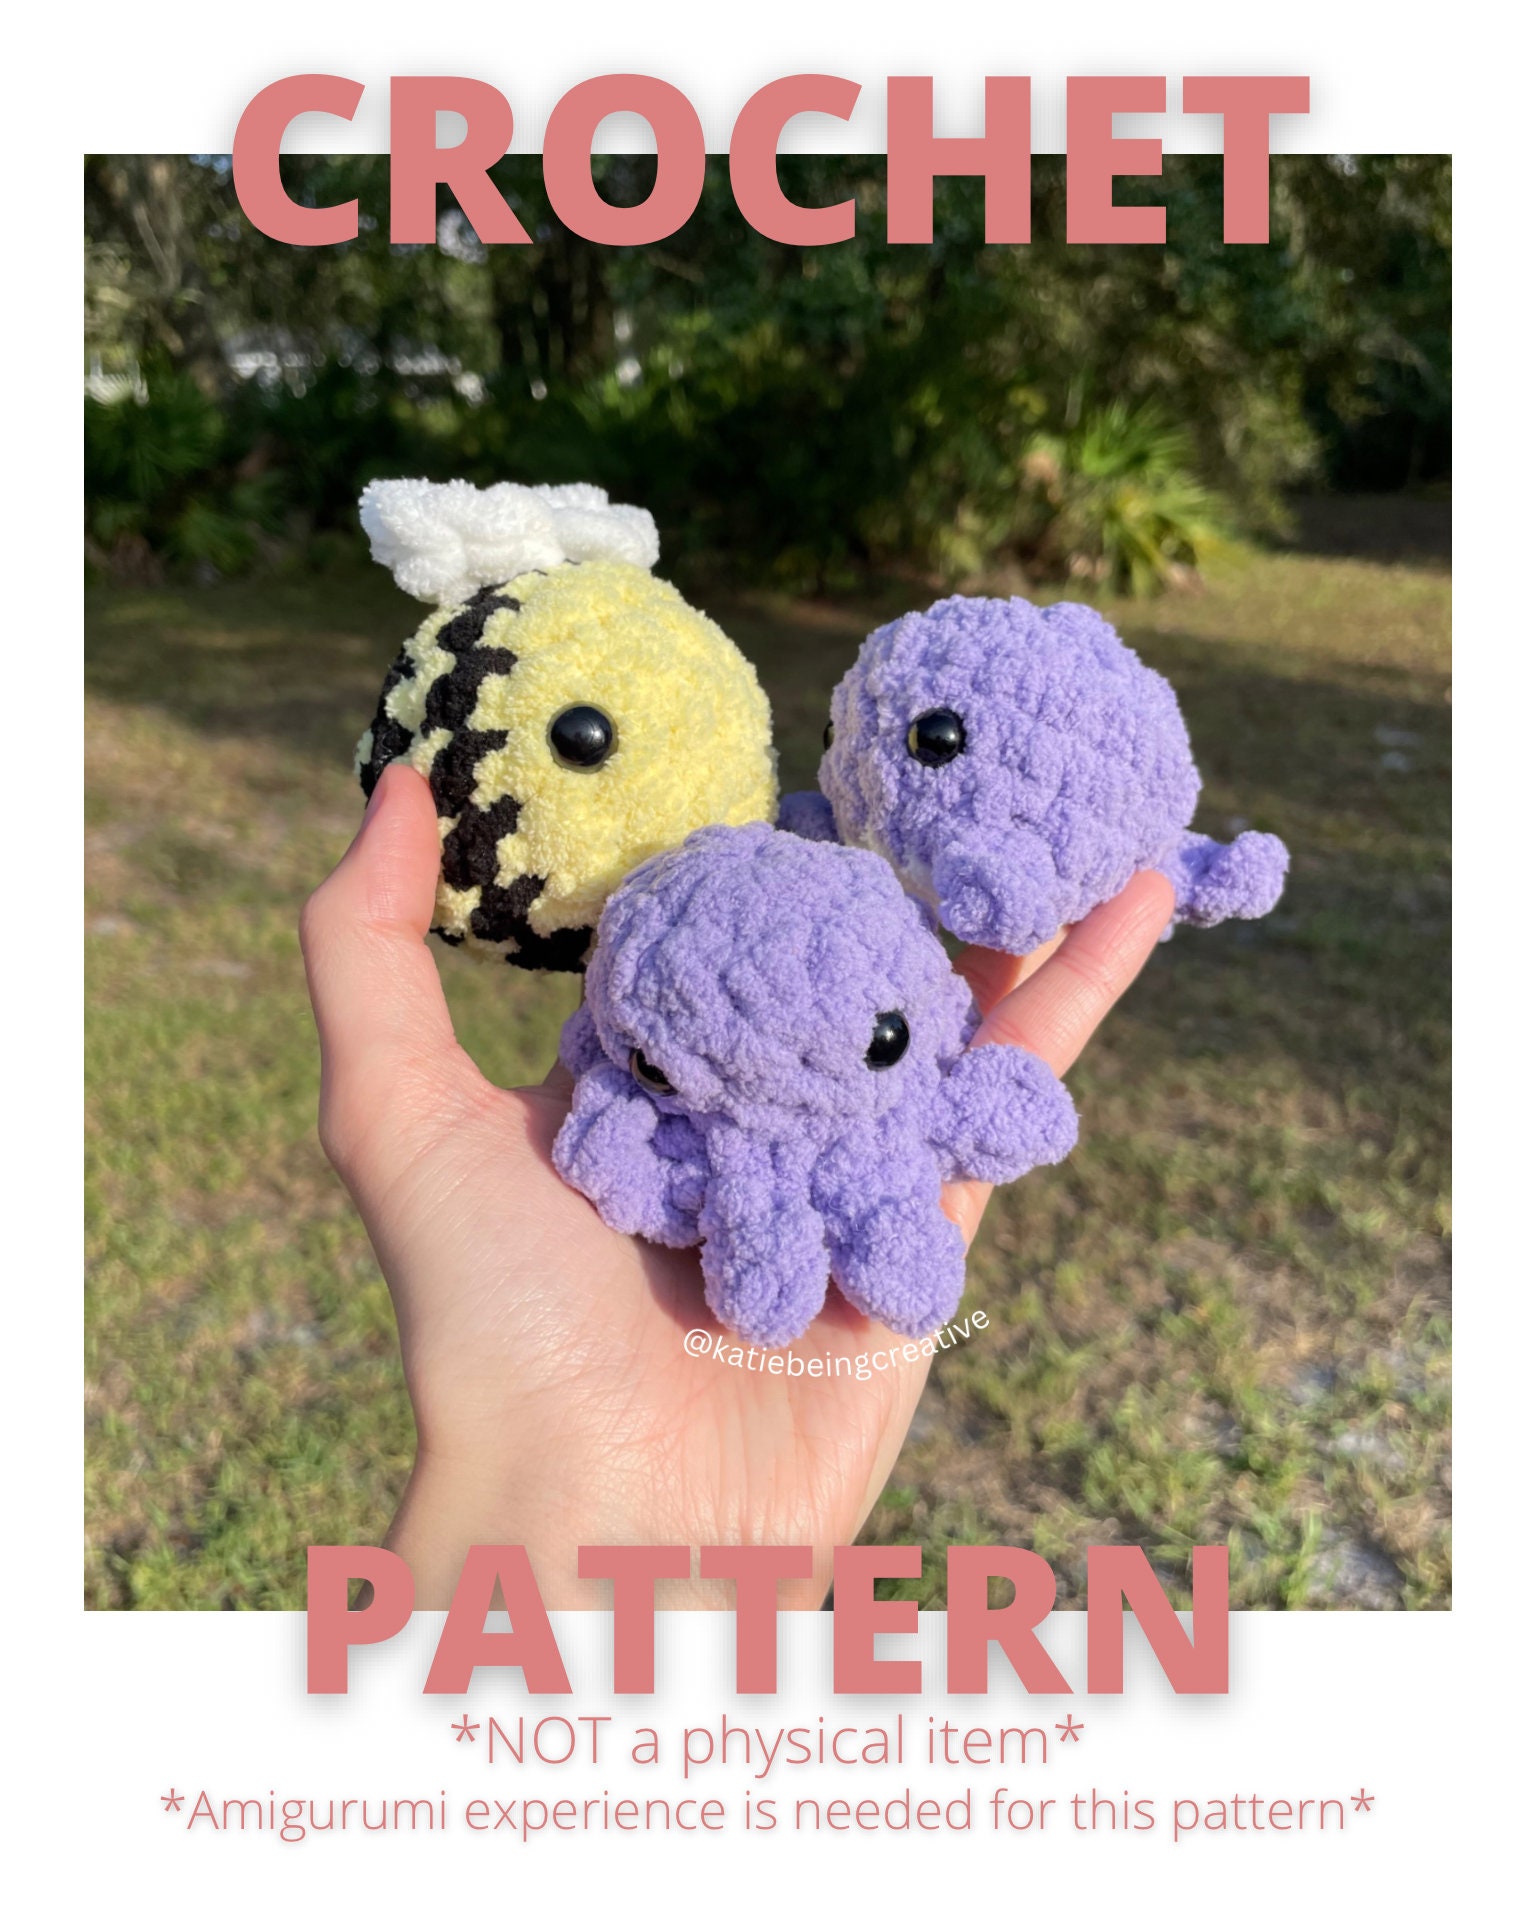 PLOXGLEM 2PCS Cartoon Octopus Design Crochet Kit for Beginners